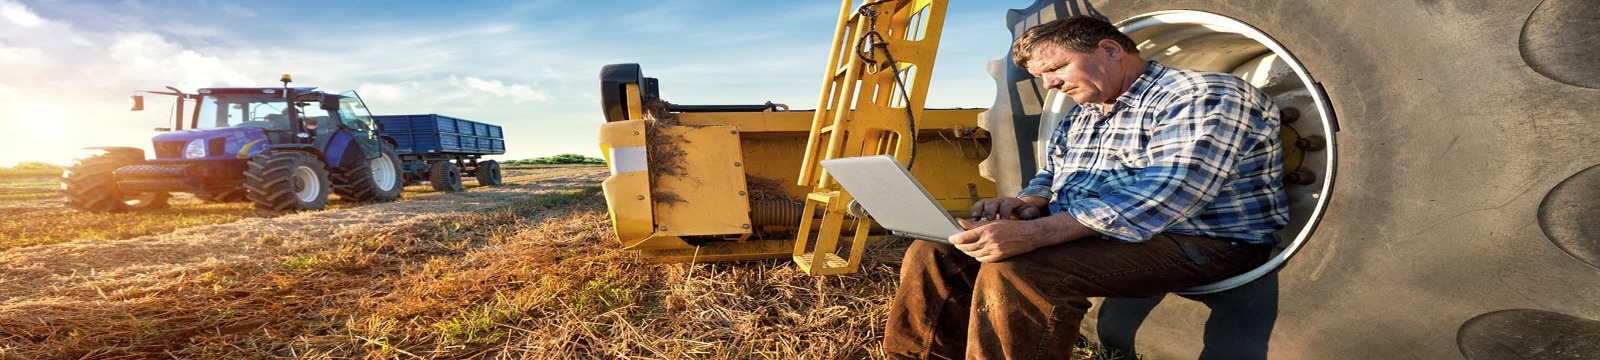 Farmer checking finances on a laptop.